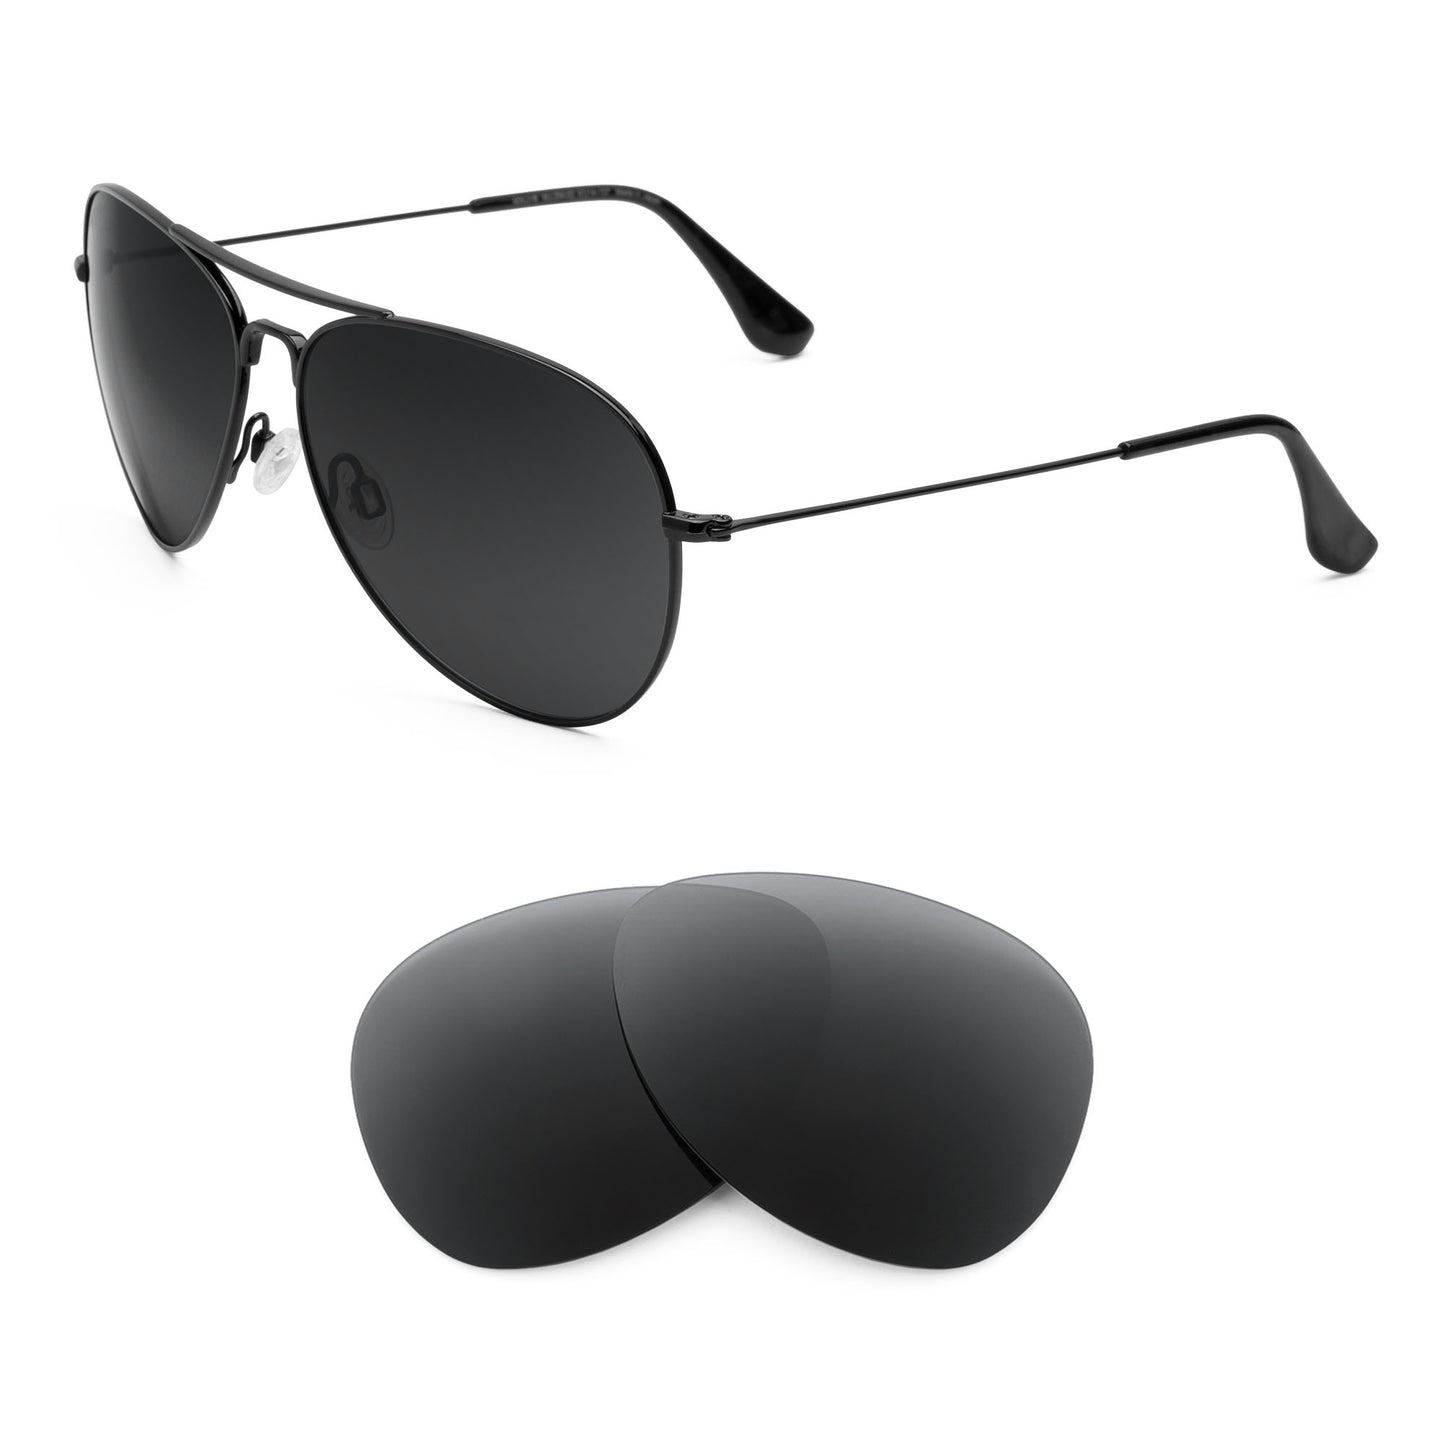 Maui Jim Mavericks sunglasses with replacement lenses